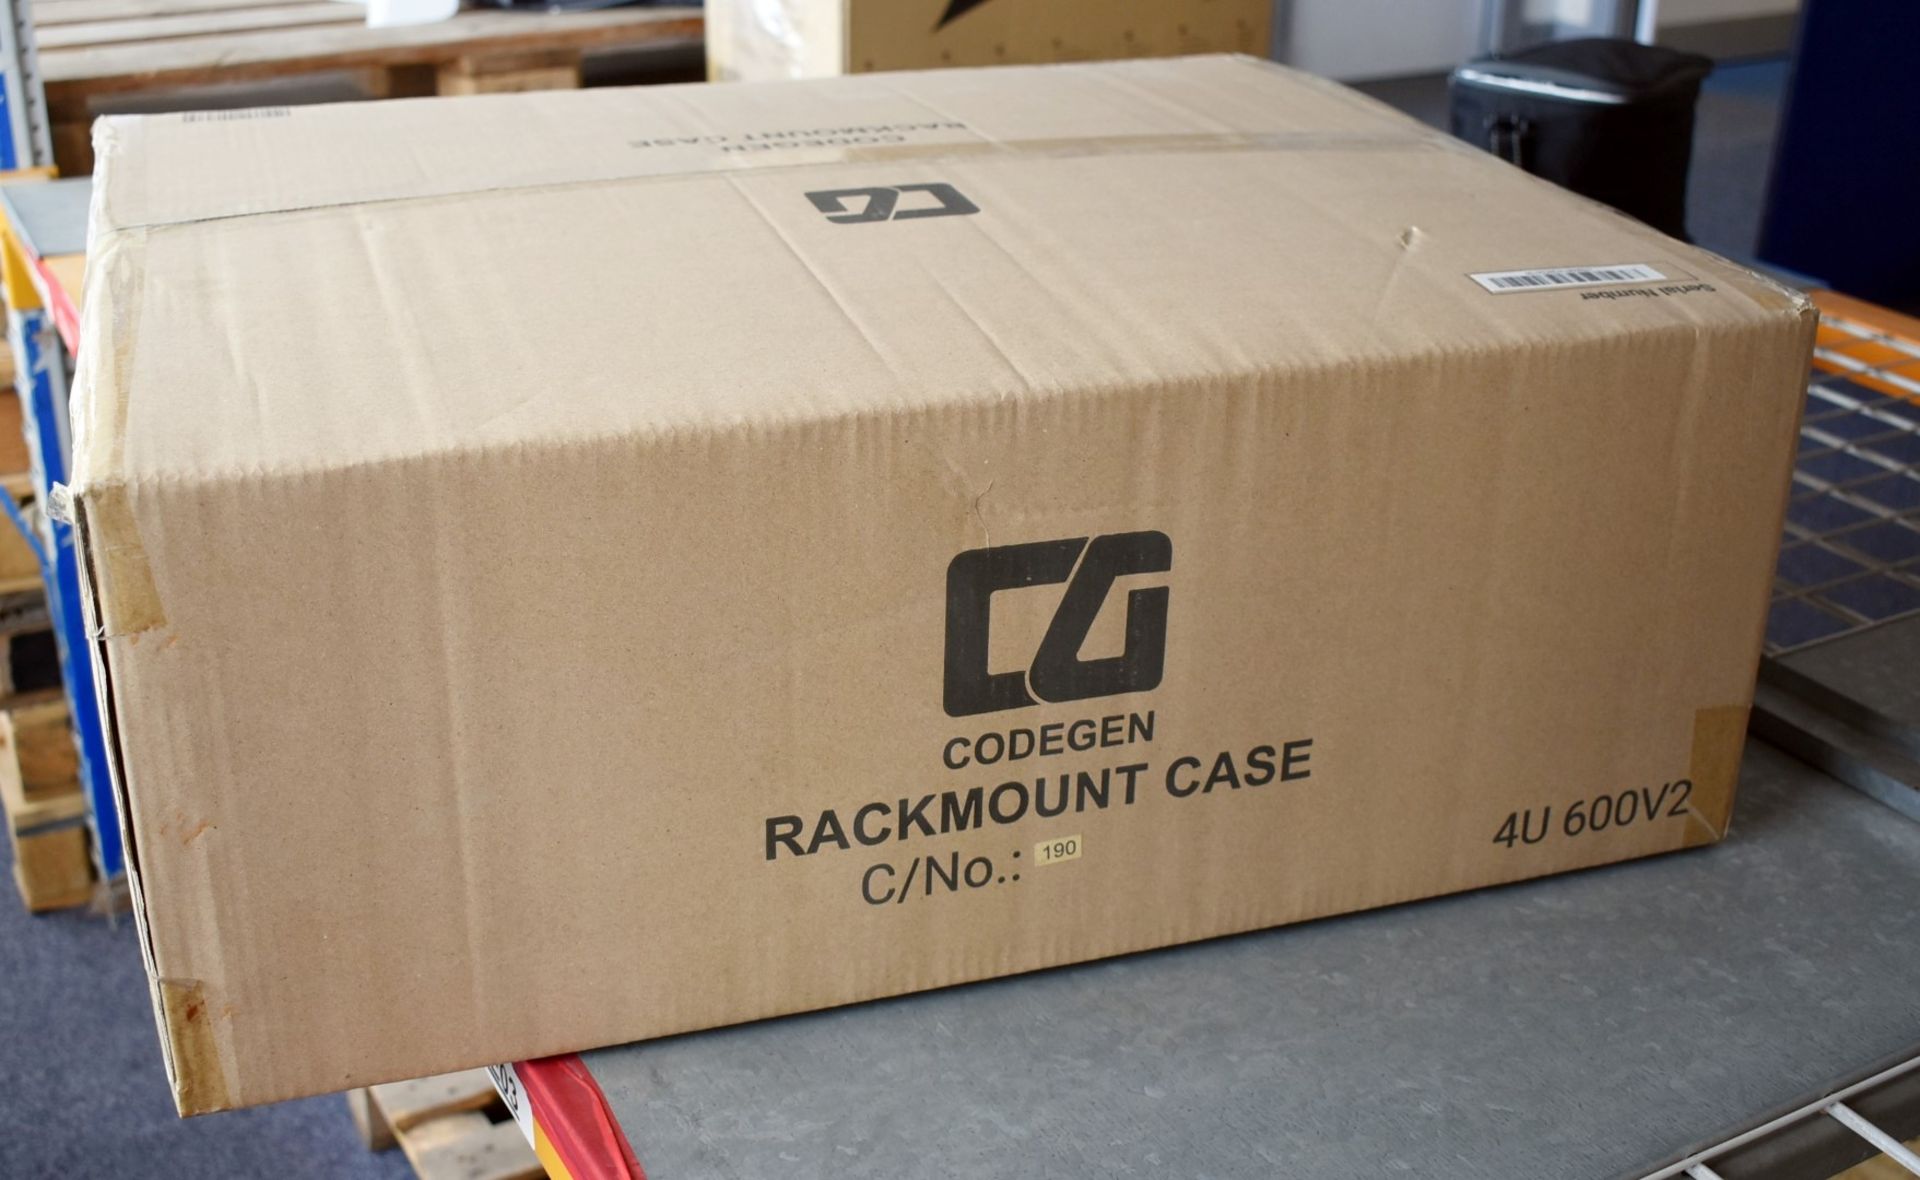 1 x CodeGen 4U Rugged Short Rackmount PC Server Chassis - New Boxed Stock - Model 600v2 - RRP £120 - Image 3 of 4